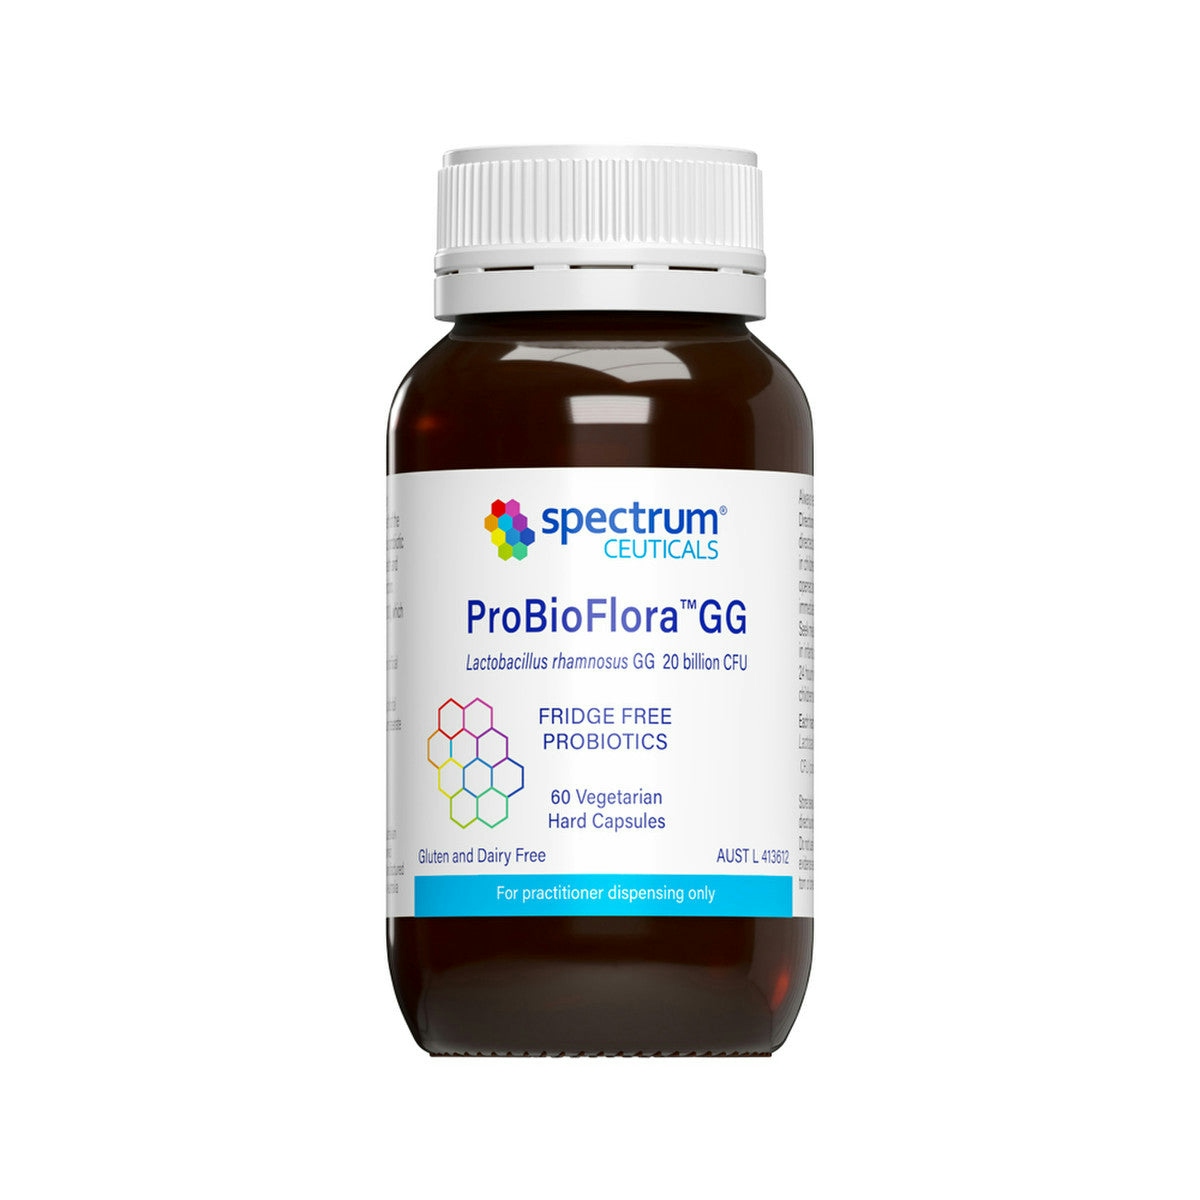 image of Spectrumceuticals ProBioFlora GG (Fridge Free Probiotics) 60vc on white background